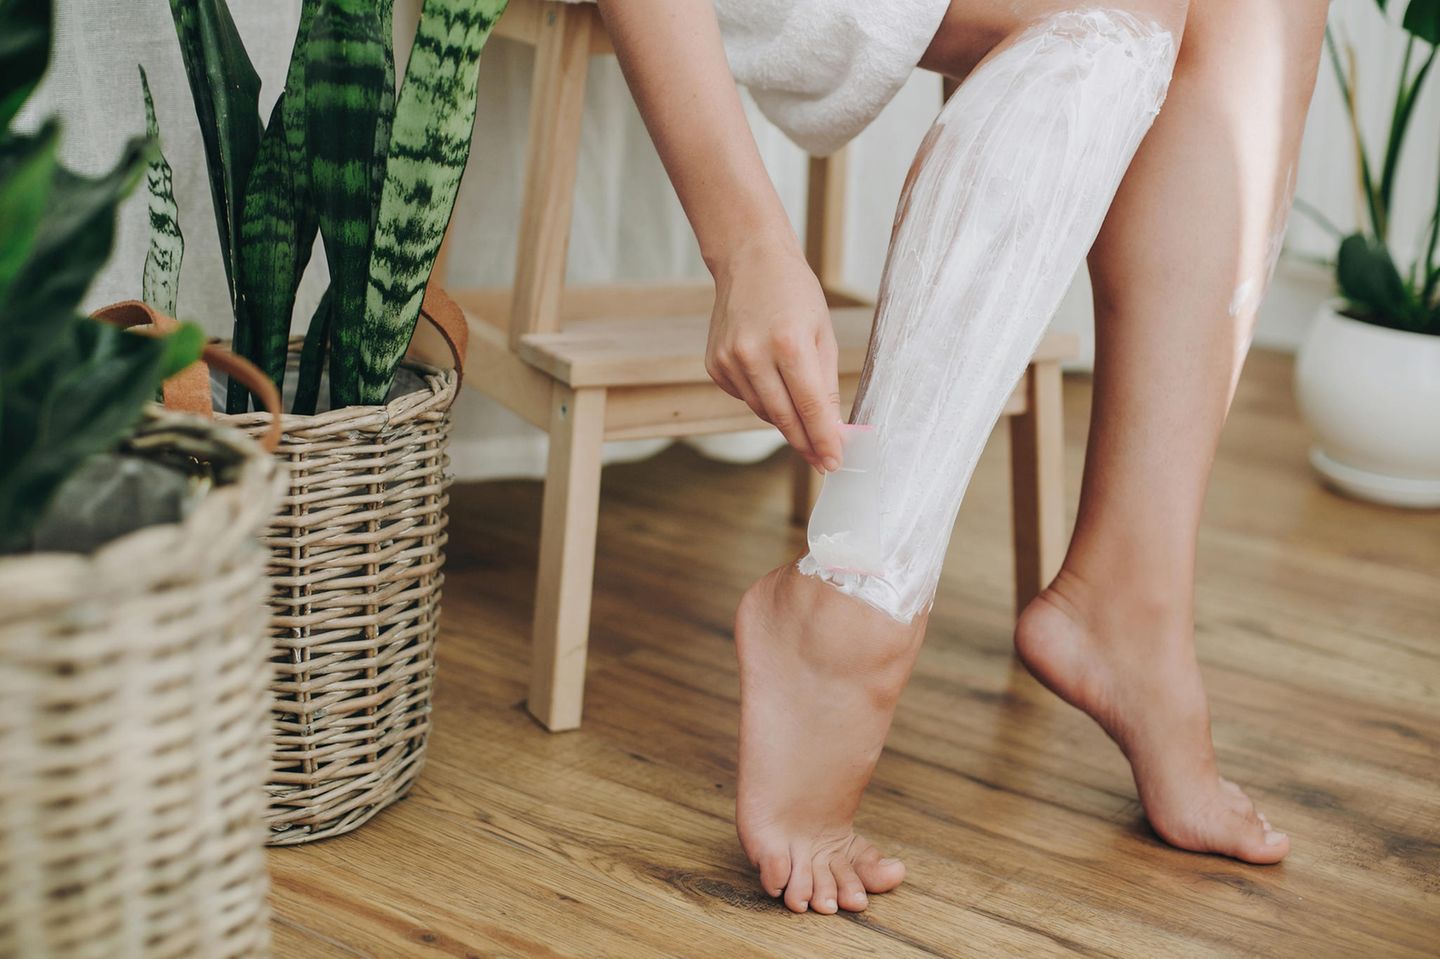 Depilatory cream: Woman depilates her legs with a depilatory cream